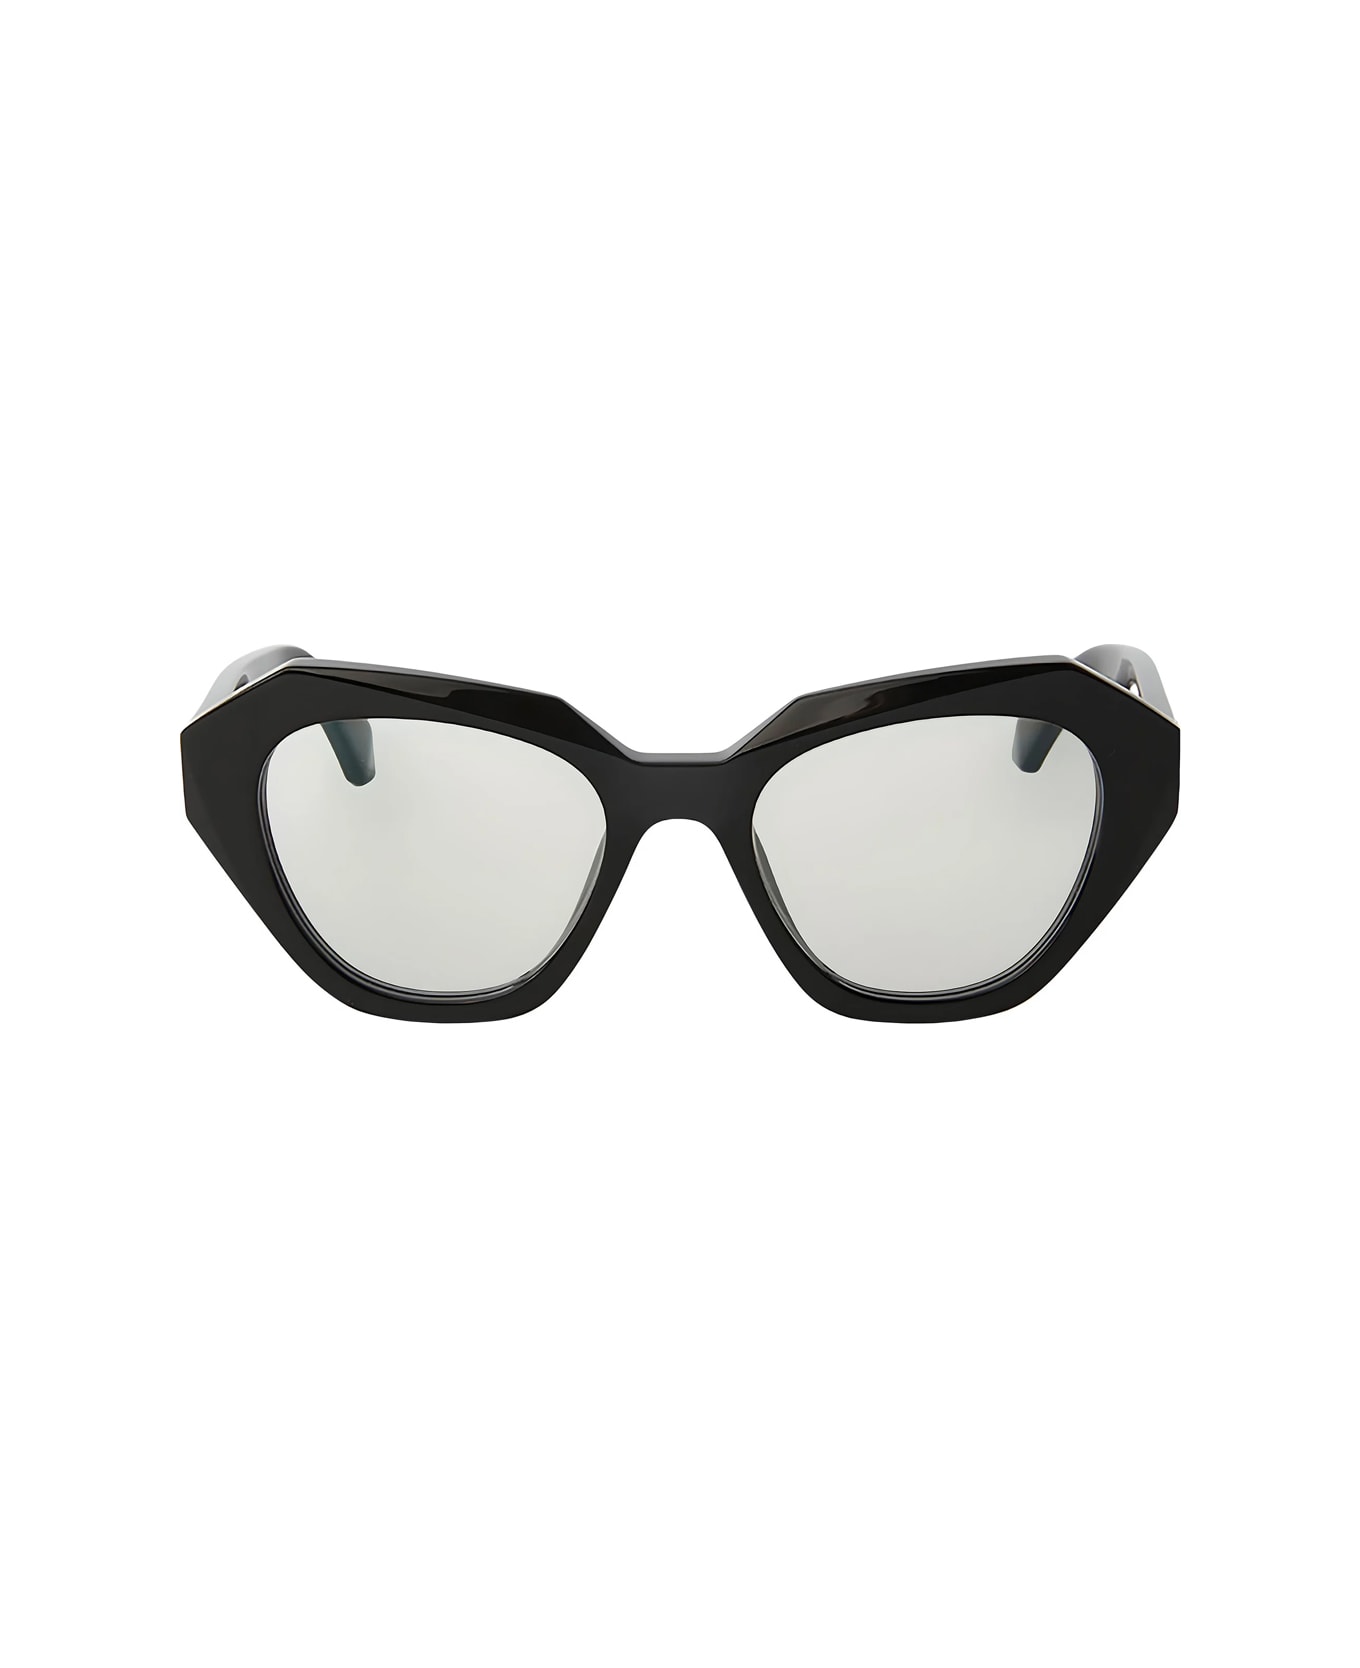 Off-White Off White Oerj074 Style 74 1000 Black Glasses - Nero アイウェア